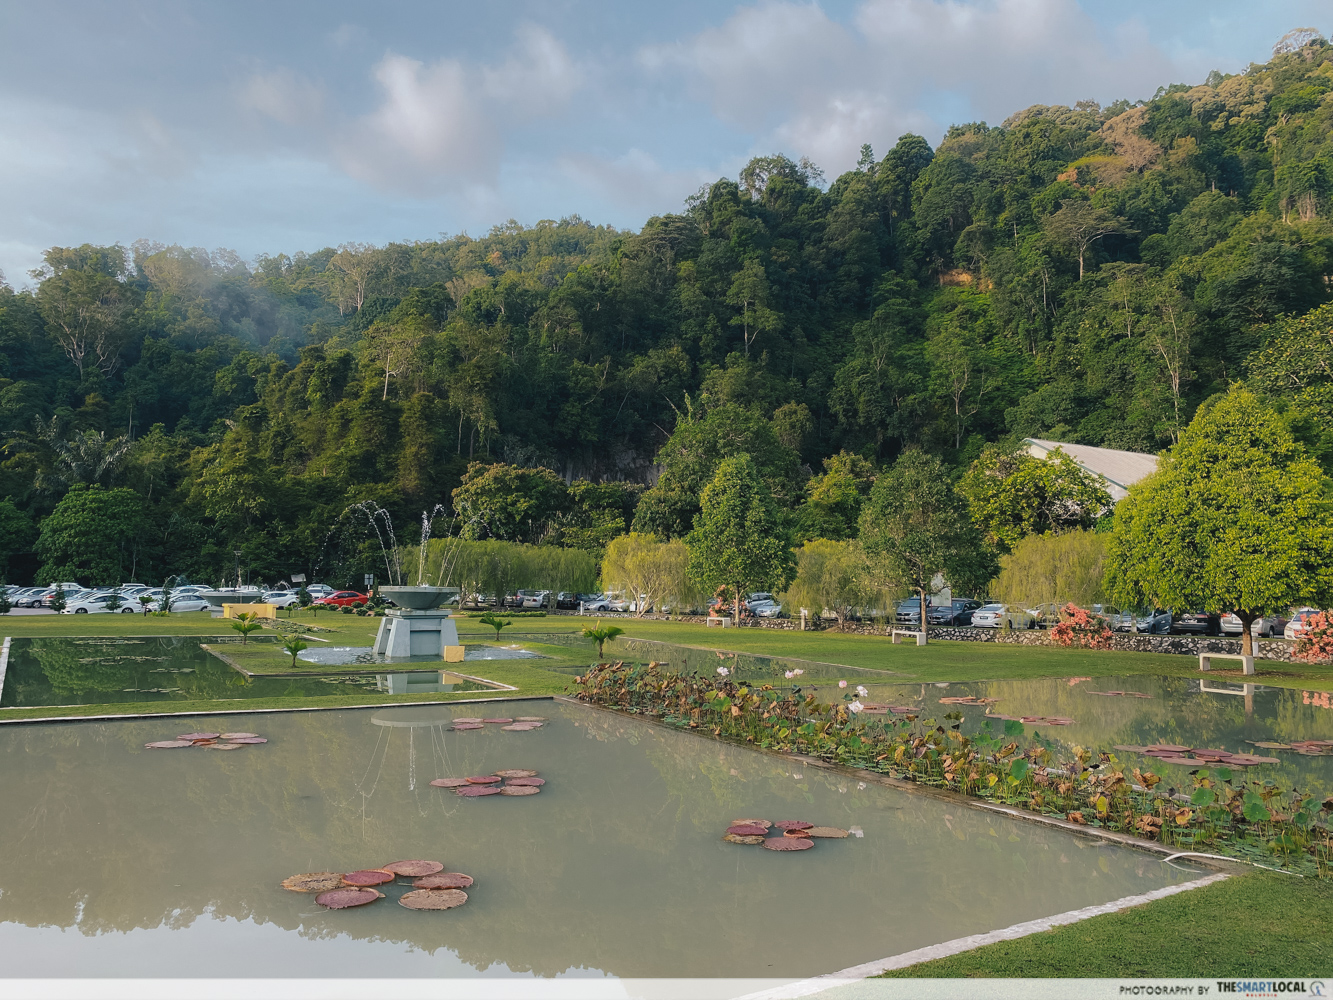 Penang Botanic Gardens - fountain